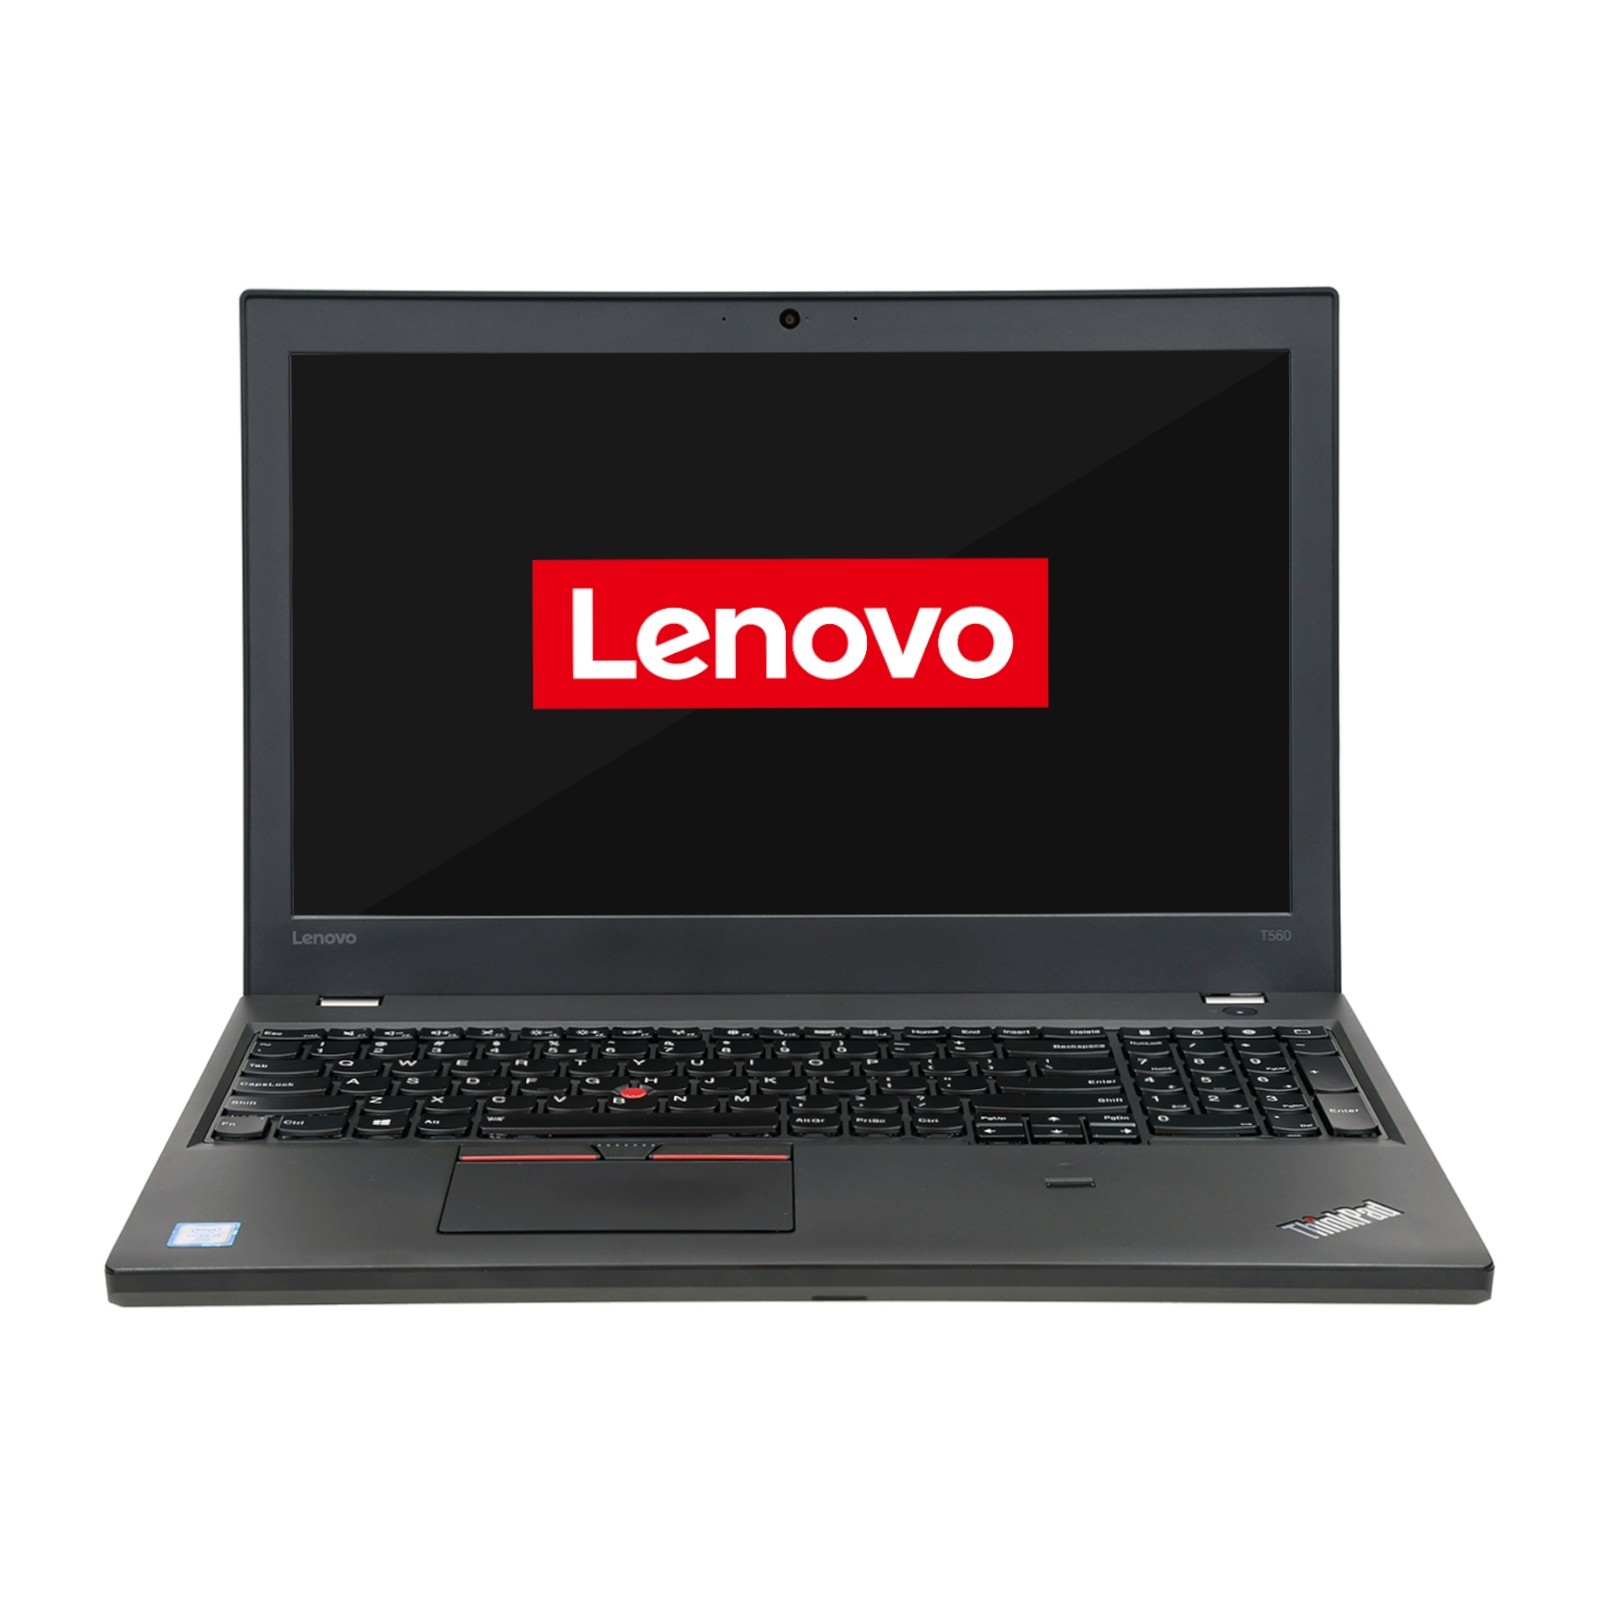 Lenovo ThinkPad T560 15.6 Inch Laptop Front